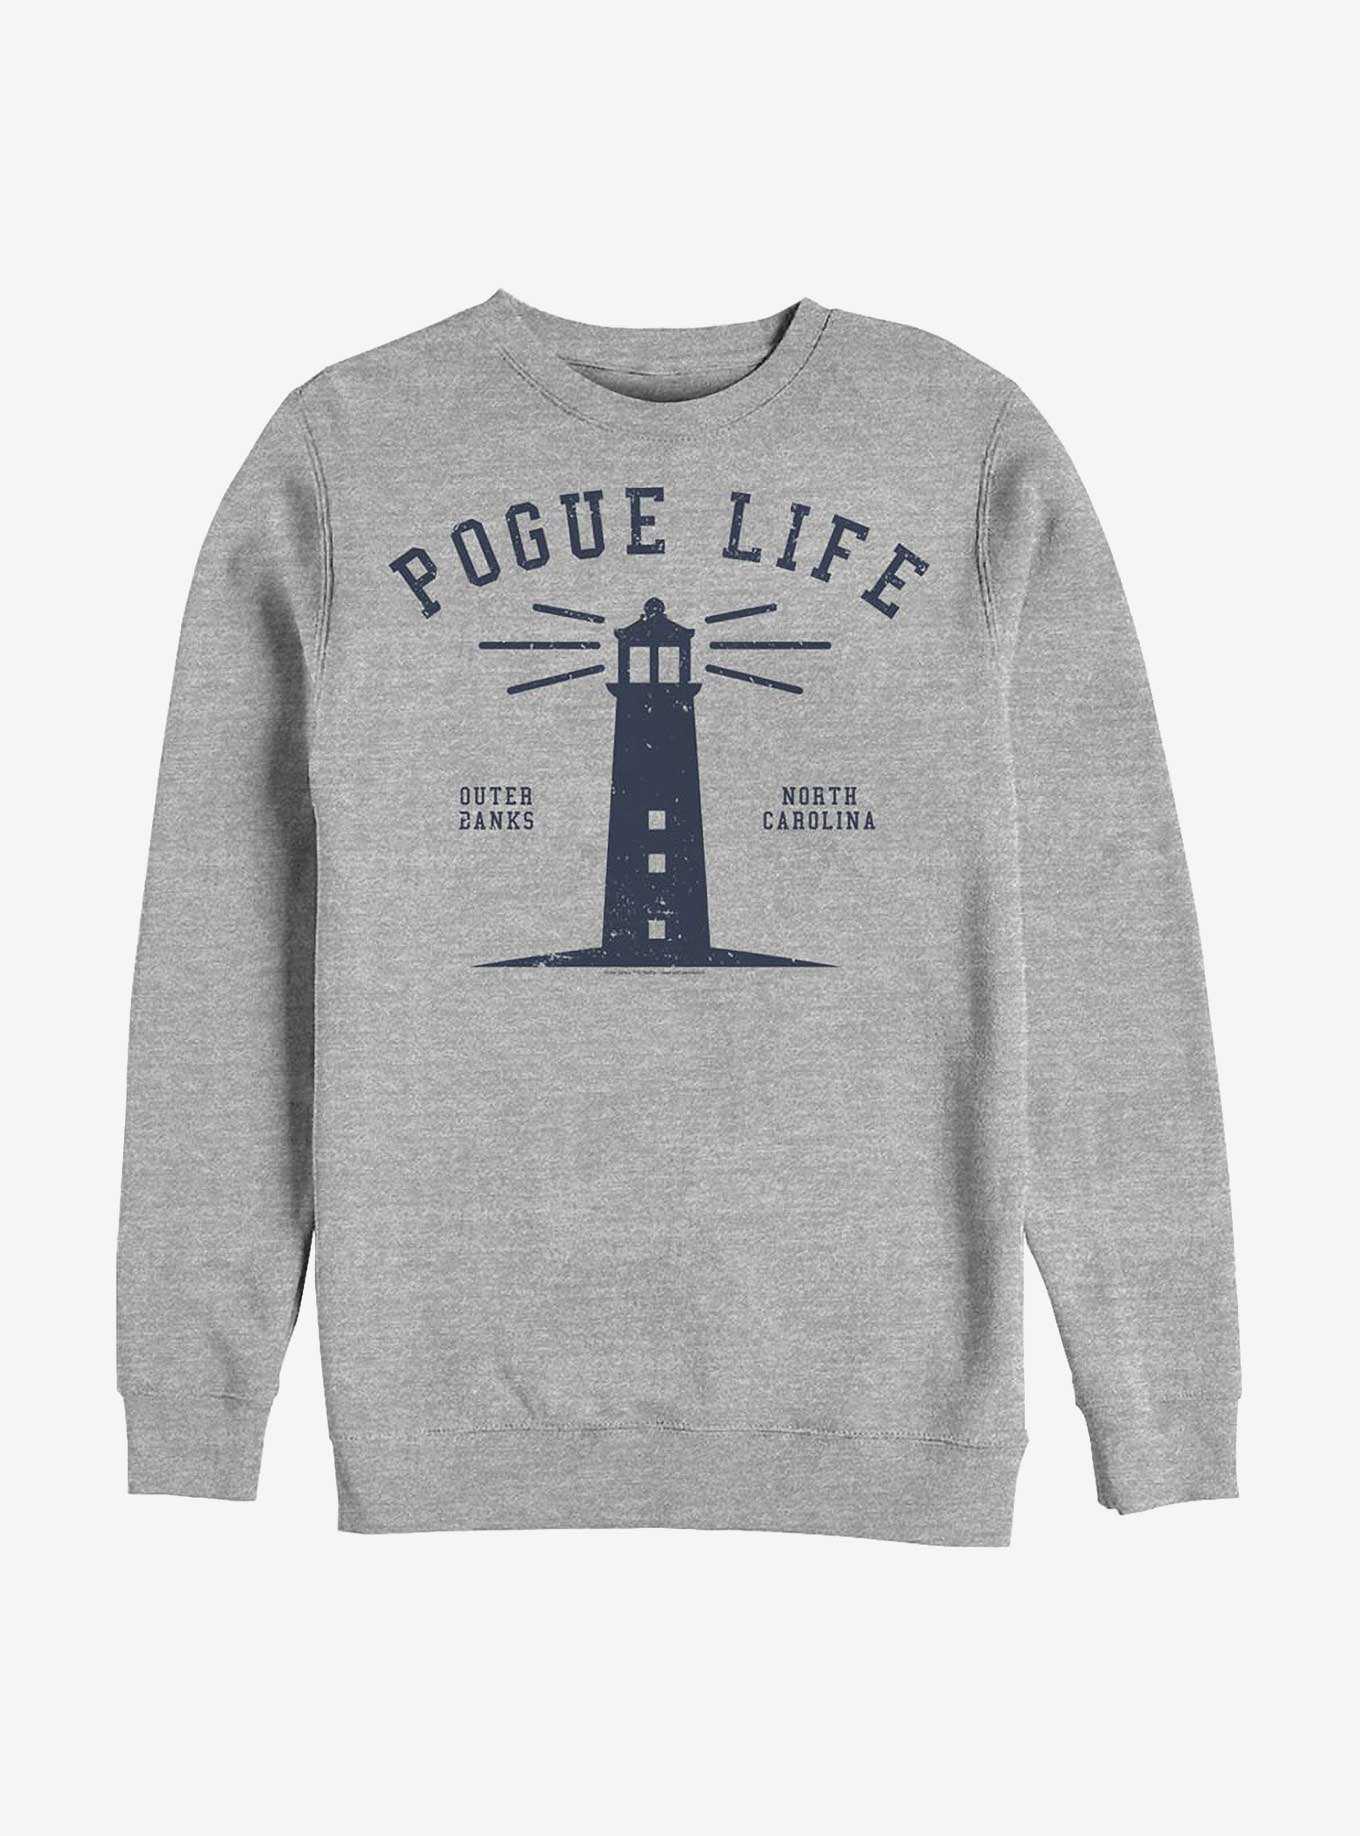 Outer Banks Pogue Life Lifehouse Sweatshirt, , hi-res